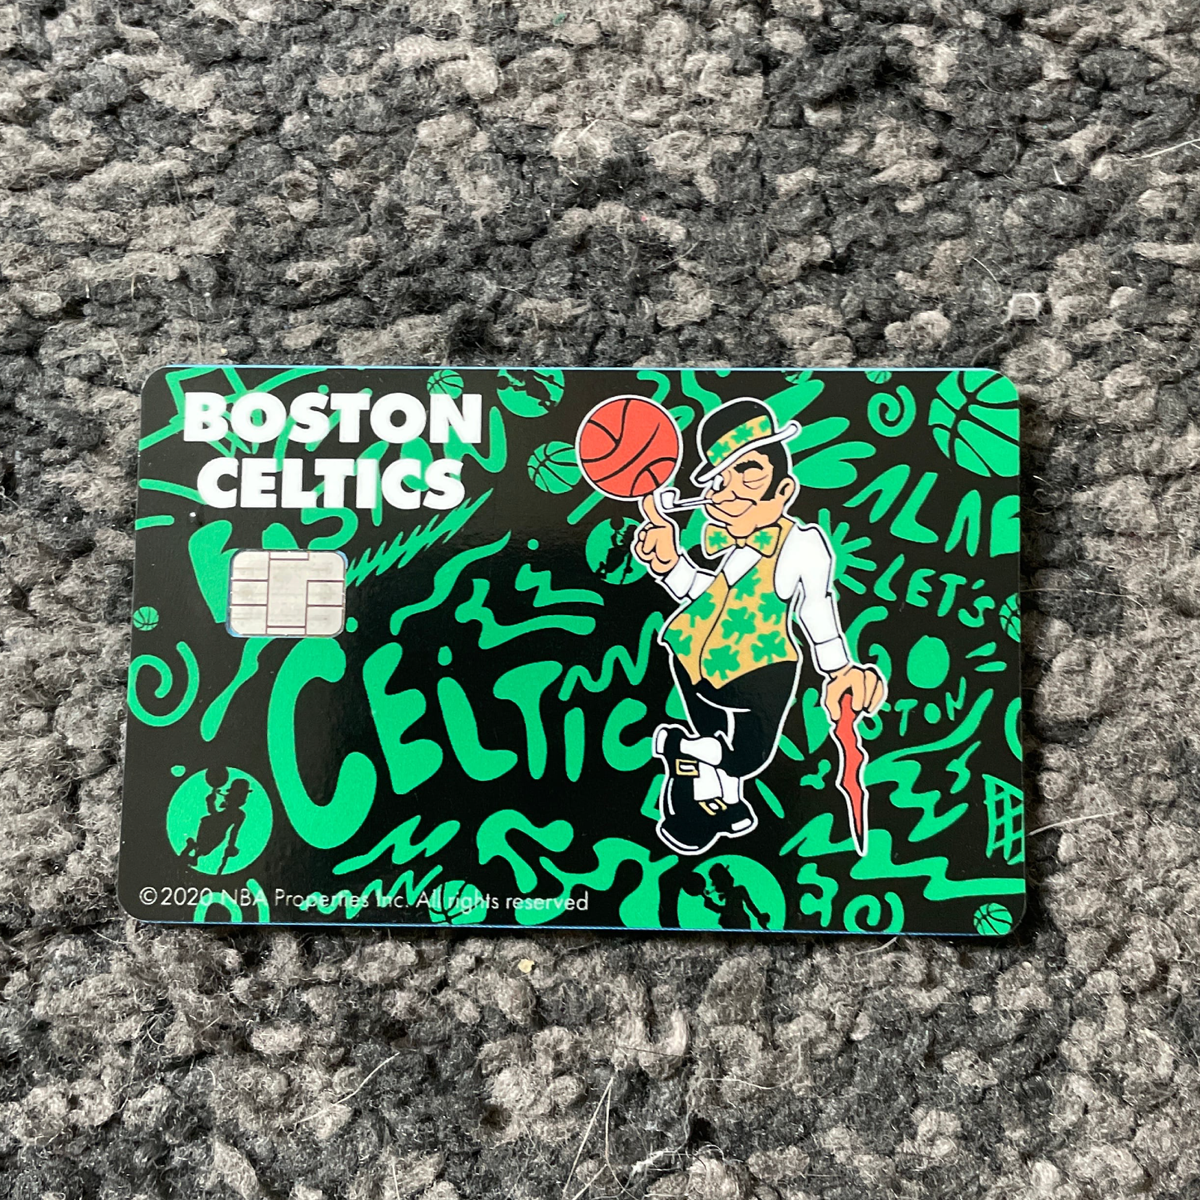 Customer showcasing their personalized nba boston celtics debit credit card skin